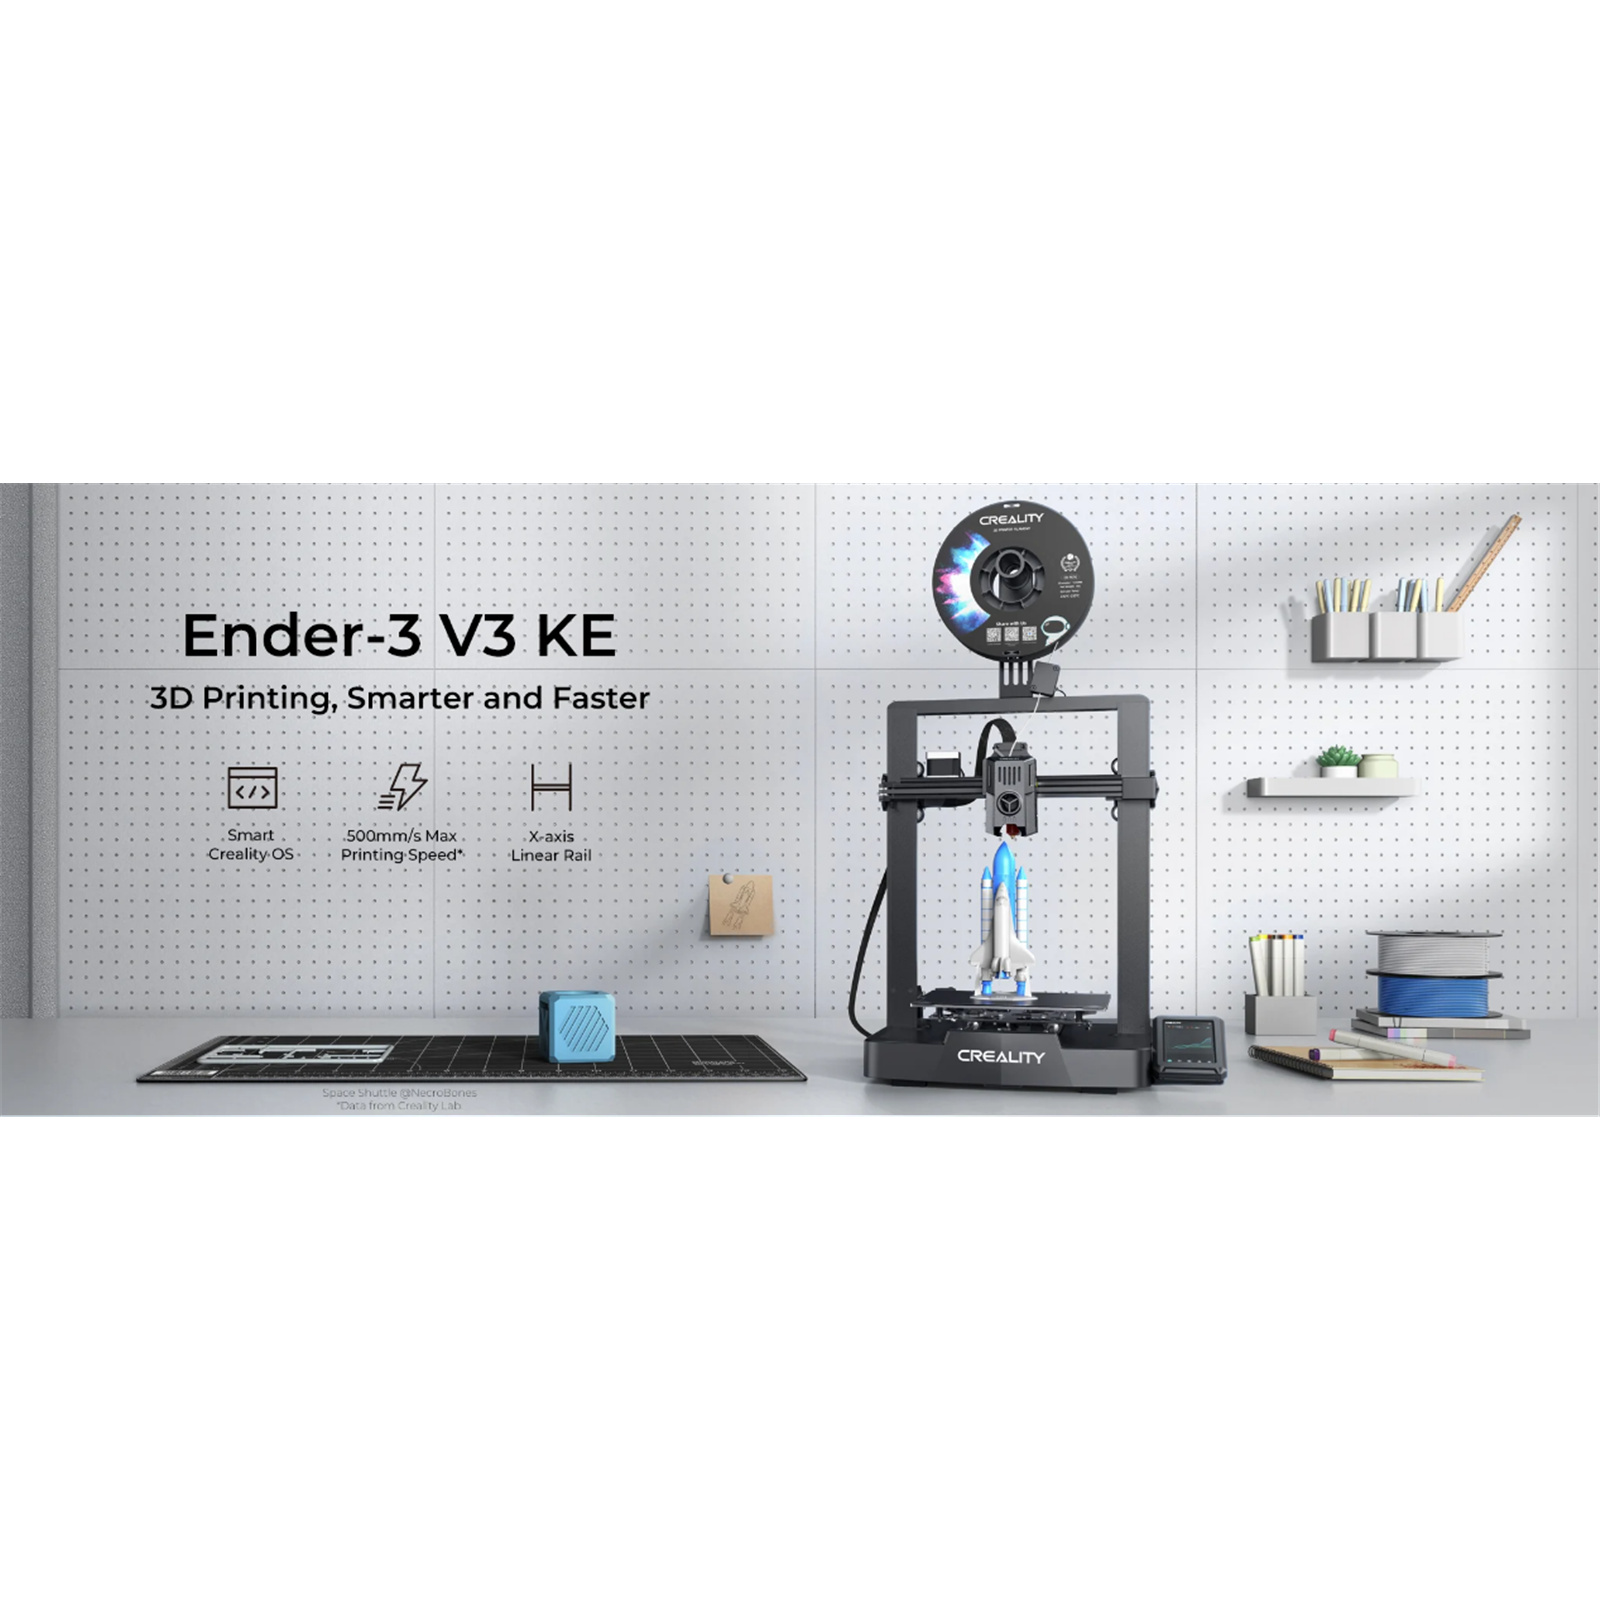 Creality 3D Printer Ender-3 V3 KE 500mm/s Fast Printing Speed